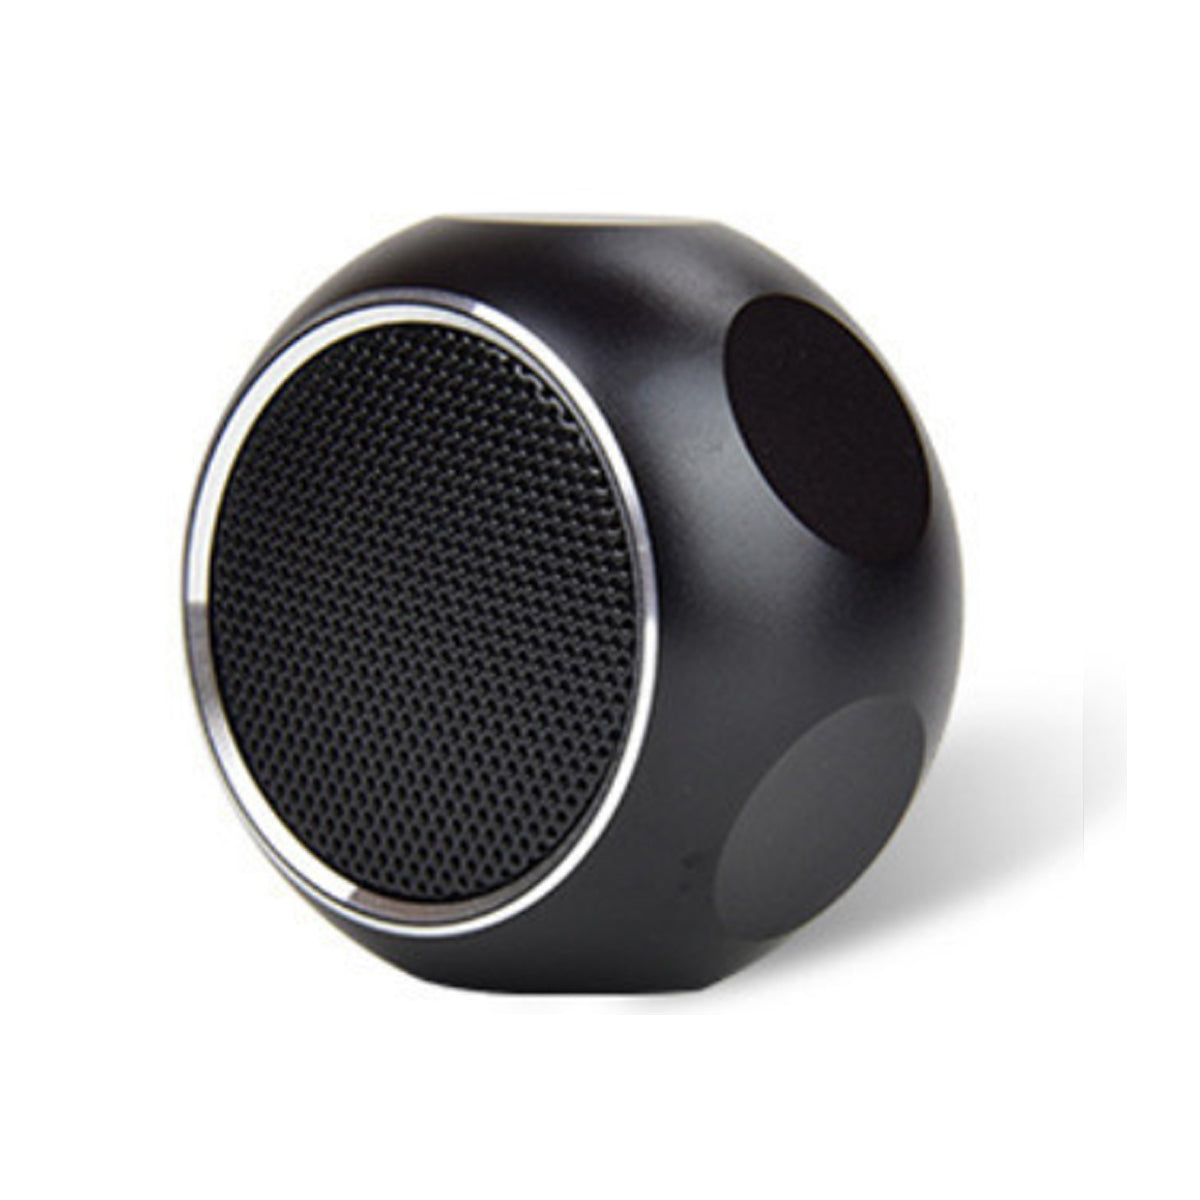 Big Sound Mini Speakers In 5 Colors by VistaShops